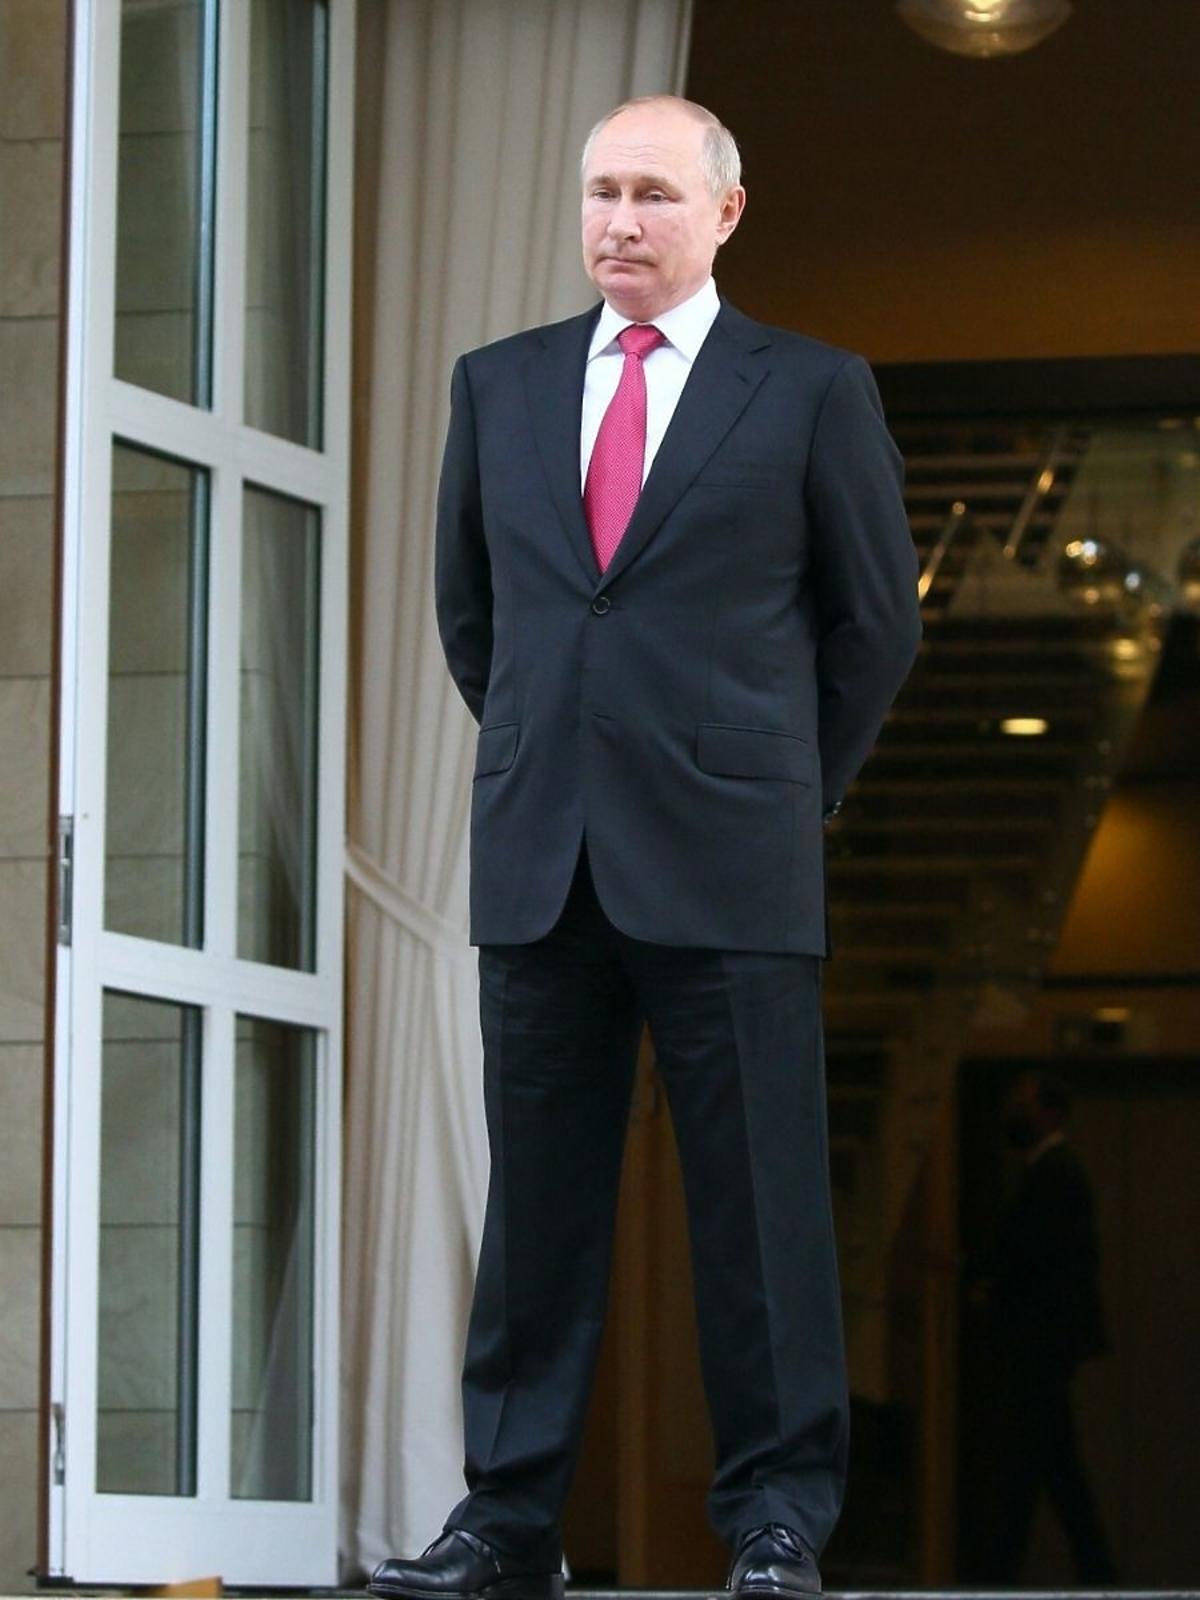 Władimir Putin ukrywa poważną chorobę